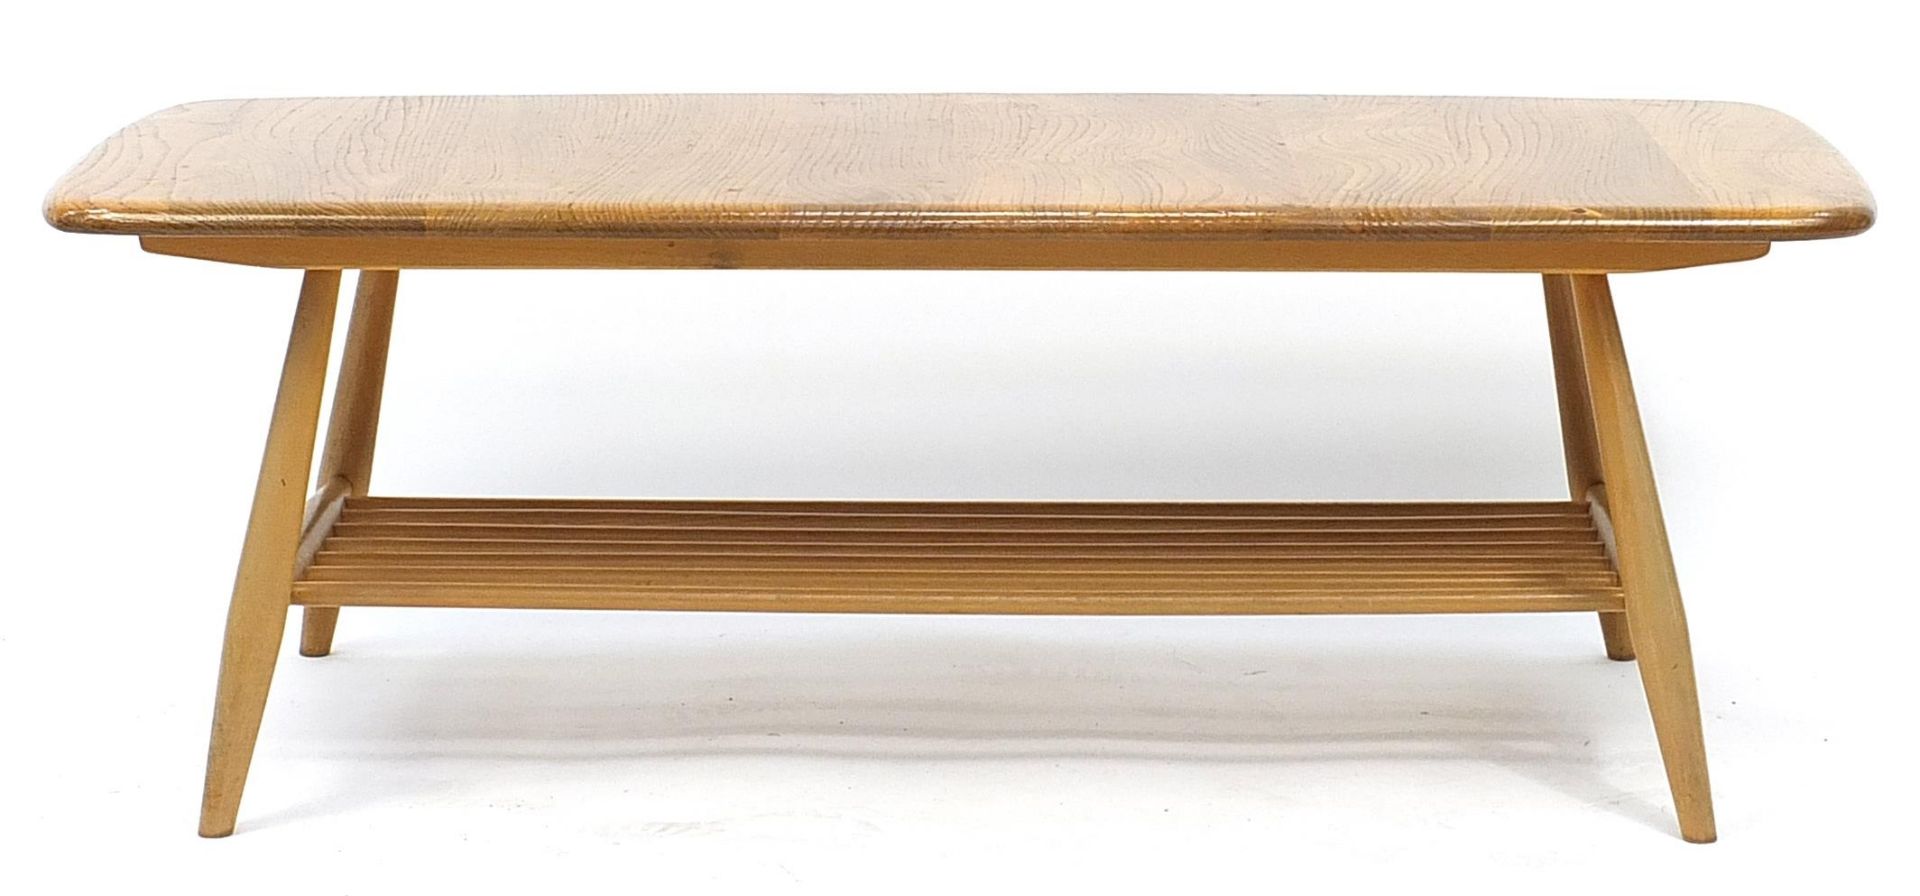 Vintage Ercol light elm coffee table with rack, 36cm H x 102cm W x 43cm D - Image 4 of 6